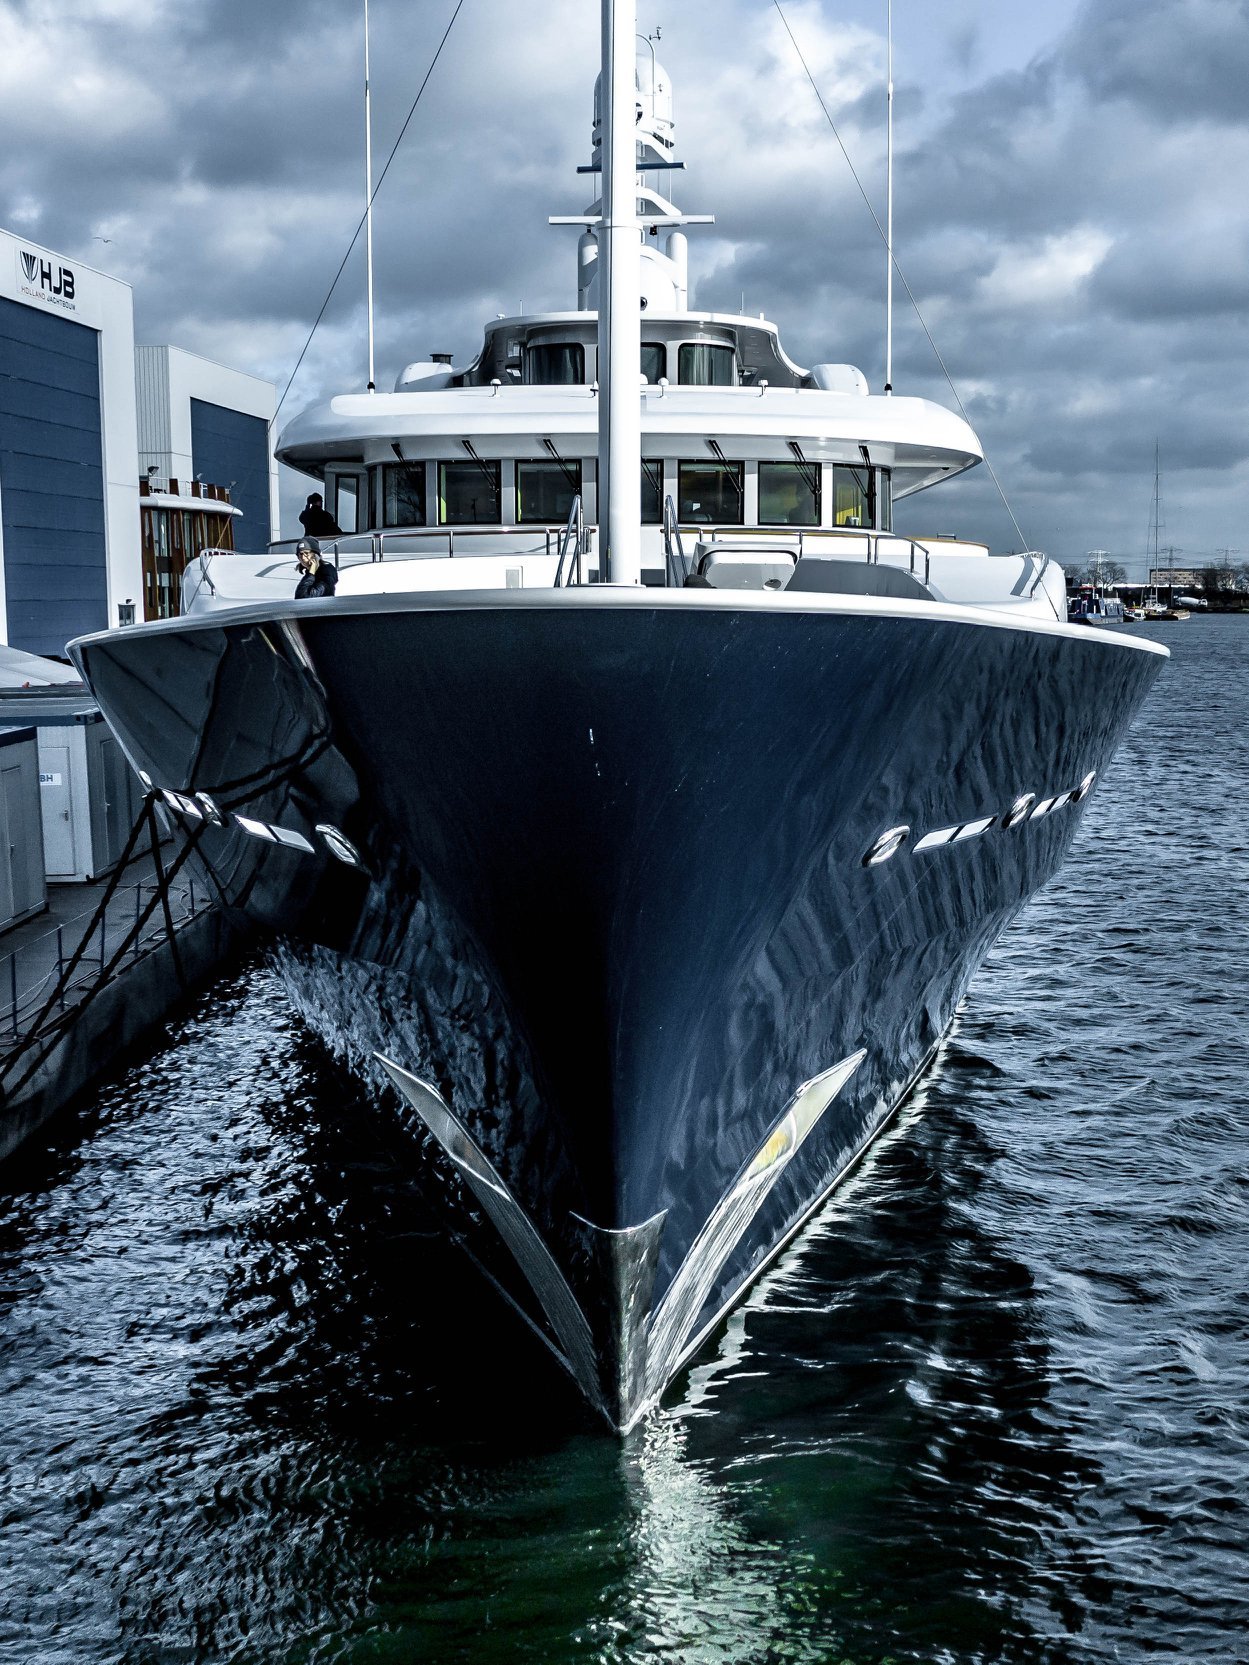 $100 million super yacht 'Archimedes' docked at Port of Pensacola